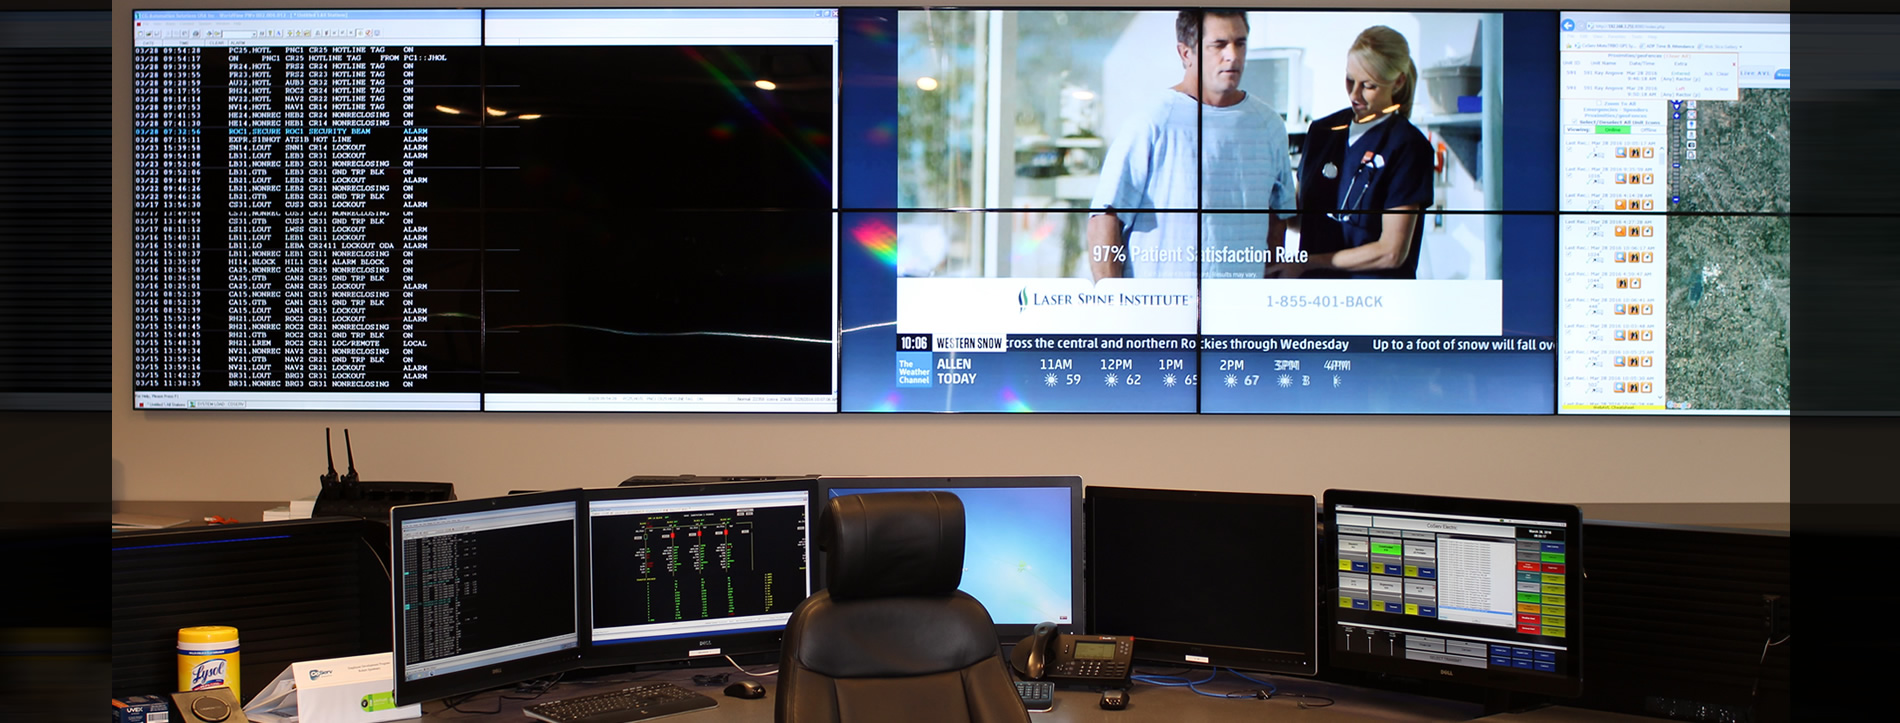 Sistema VideoWall monitoramento